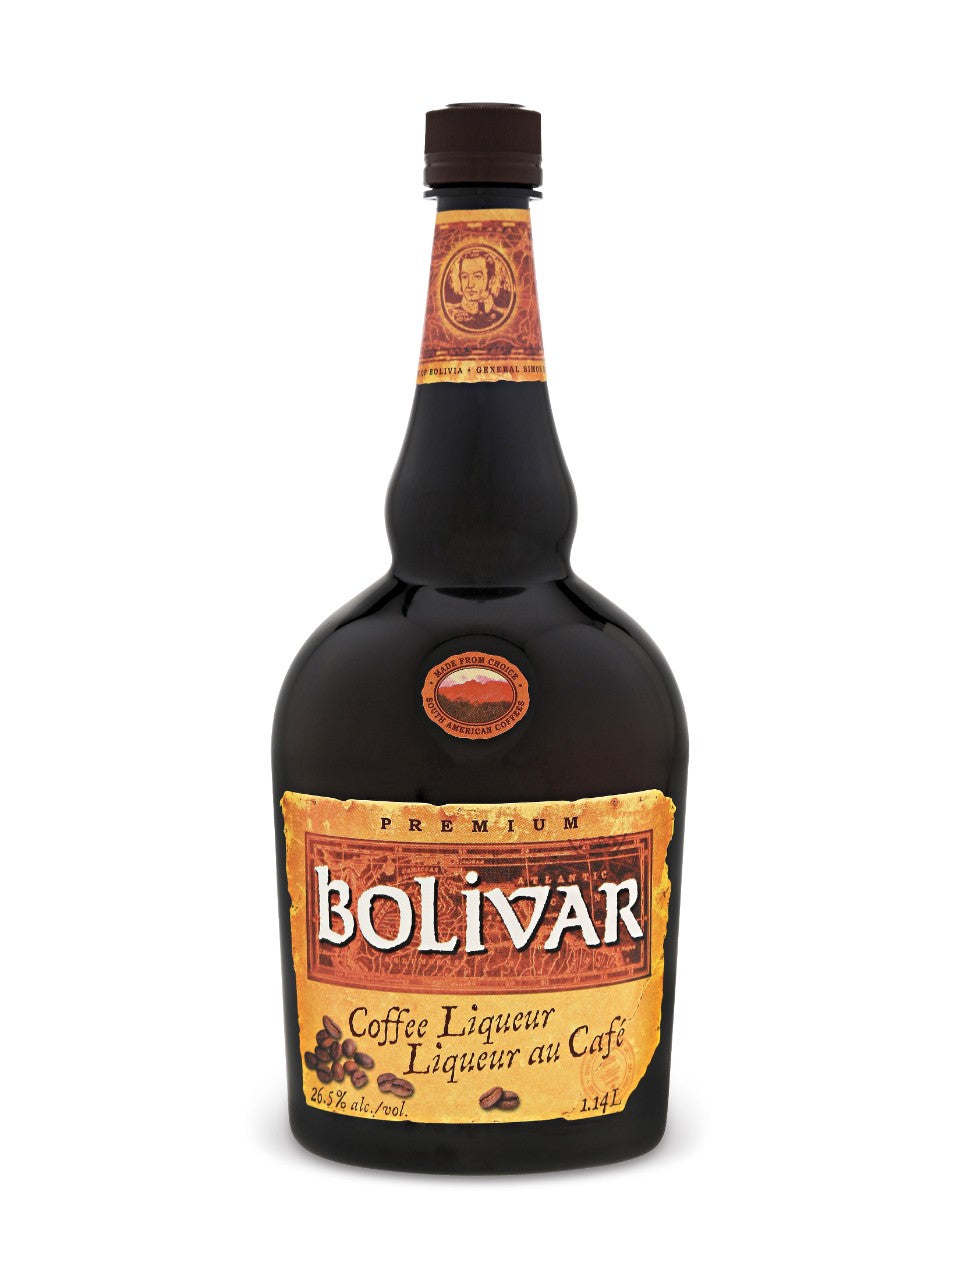 Bolivar Coffee Liqueur 1140 ml bottle